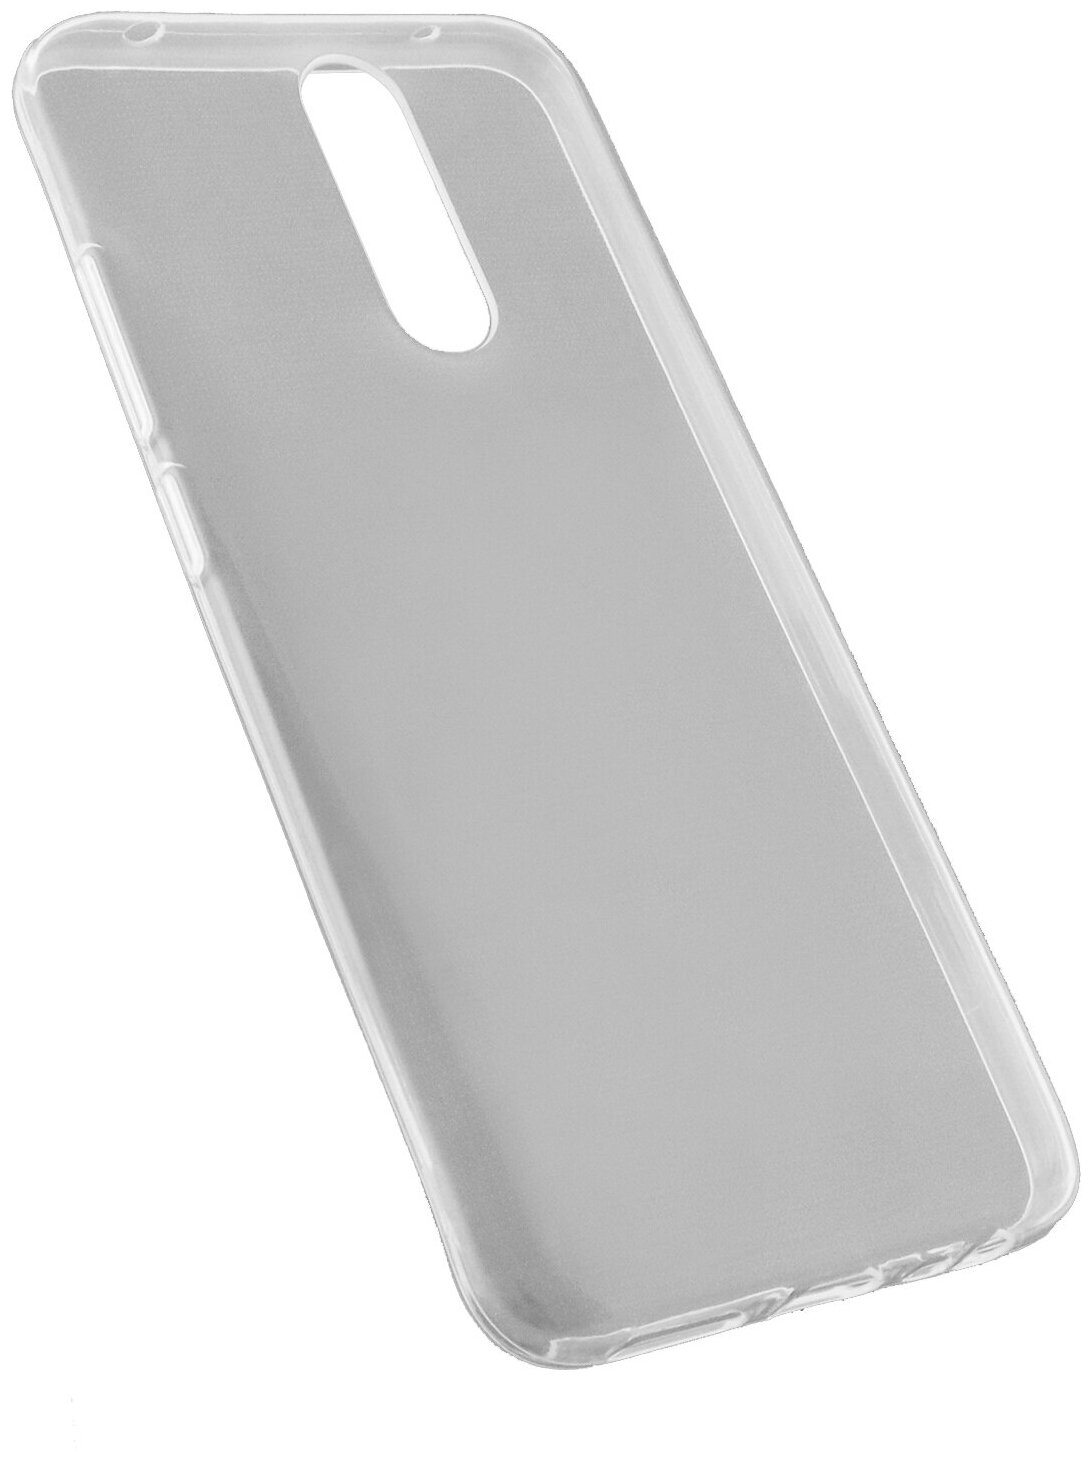 Защитный чехол для Xiaomi Redmi 8 / на Сяоми Редми 8 / бампер / накладка на телефон Прозрачный